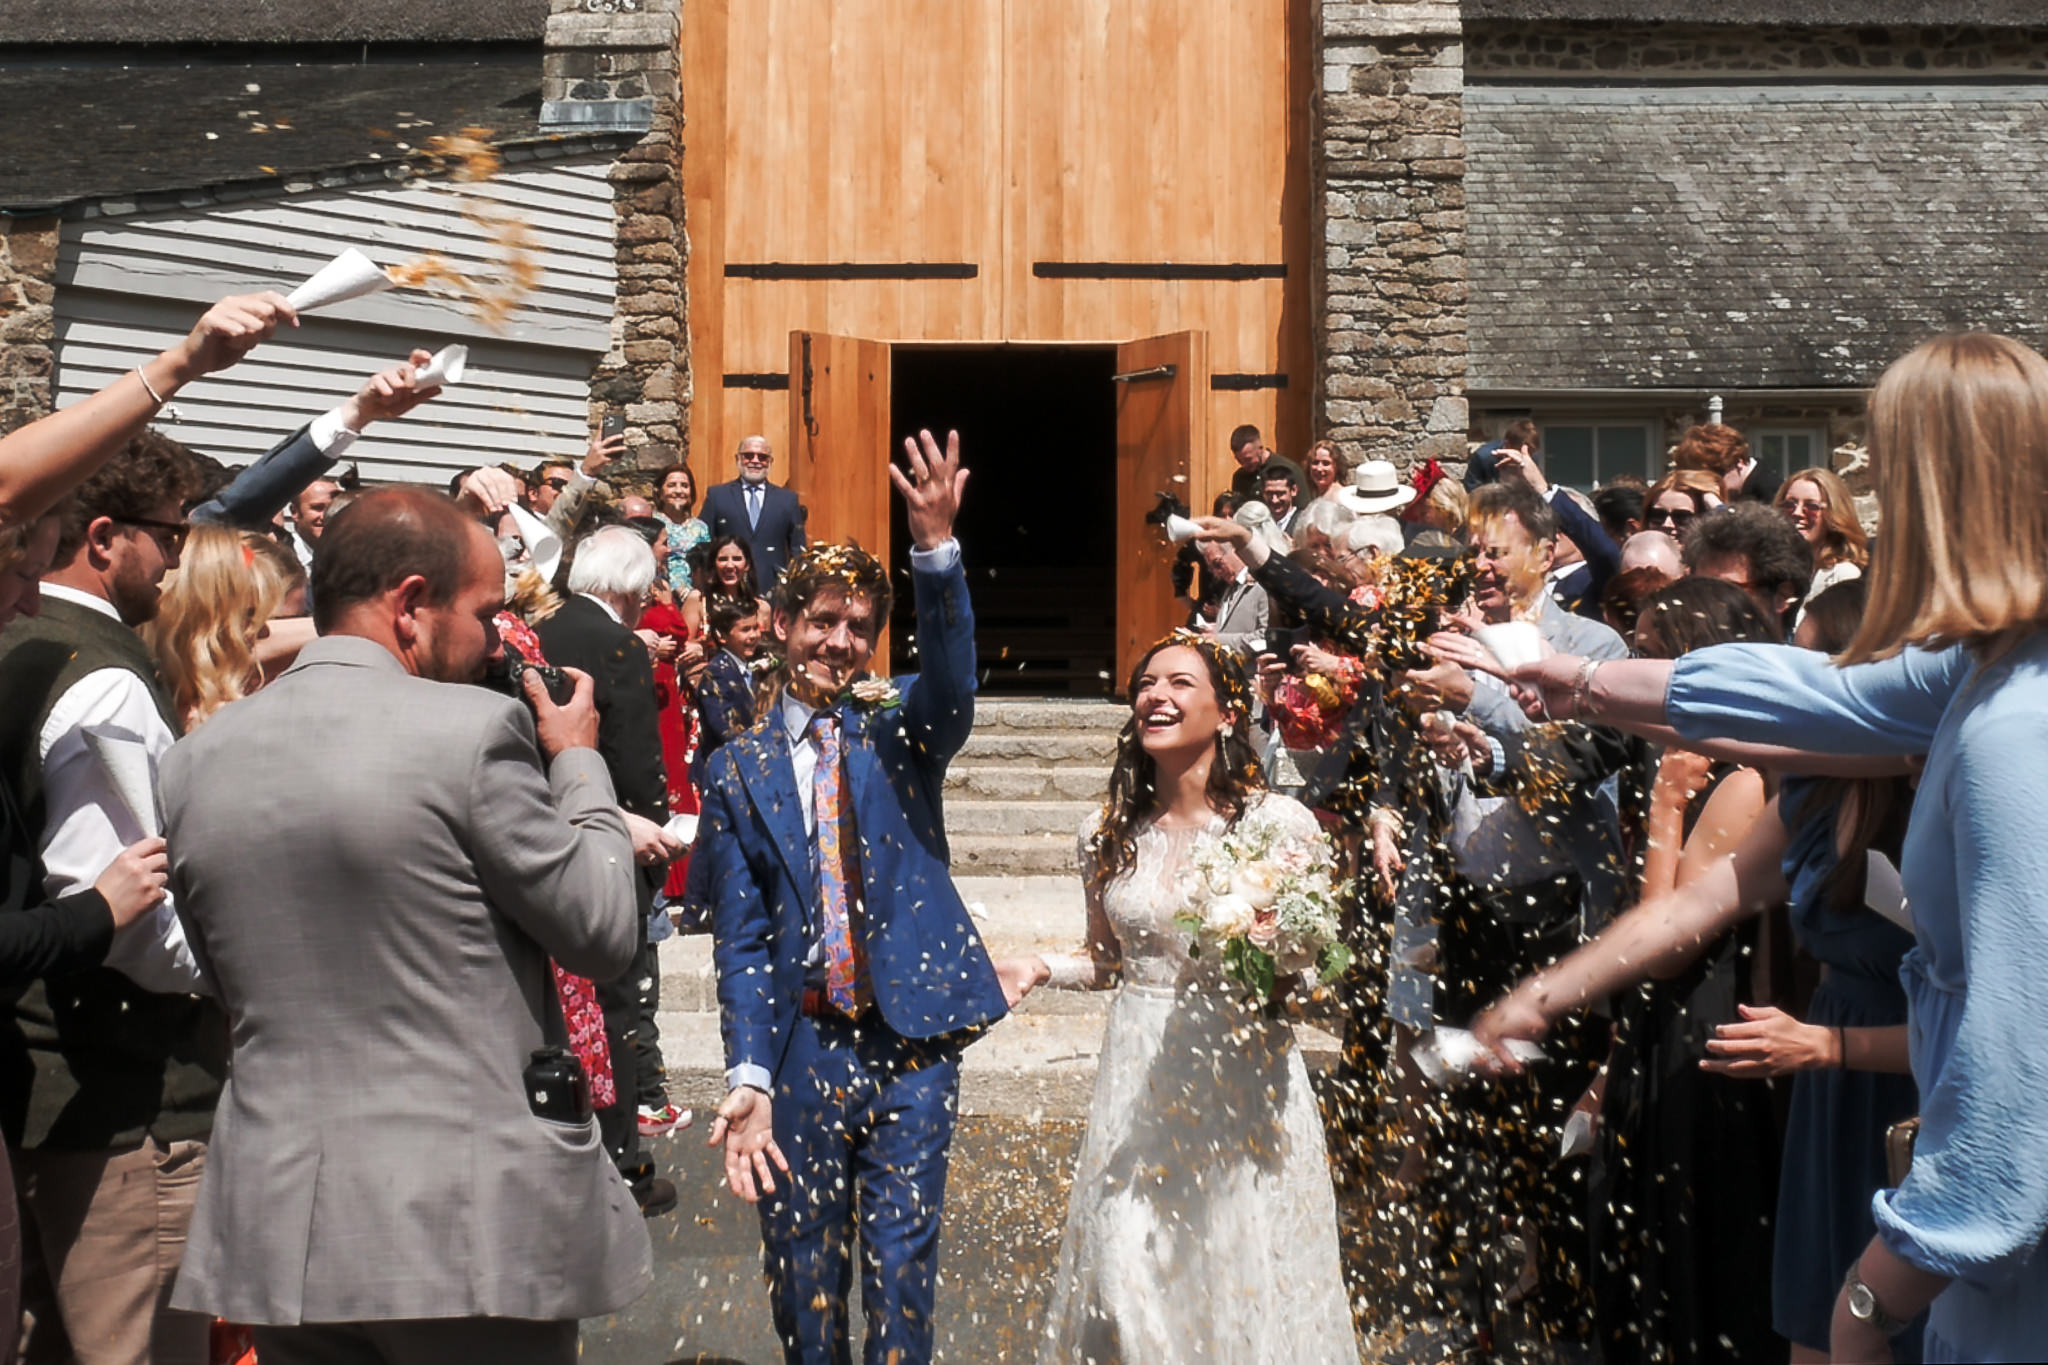 The Great Barn Devon Wedding Videographer Confetti Shower in front of the barn